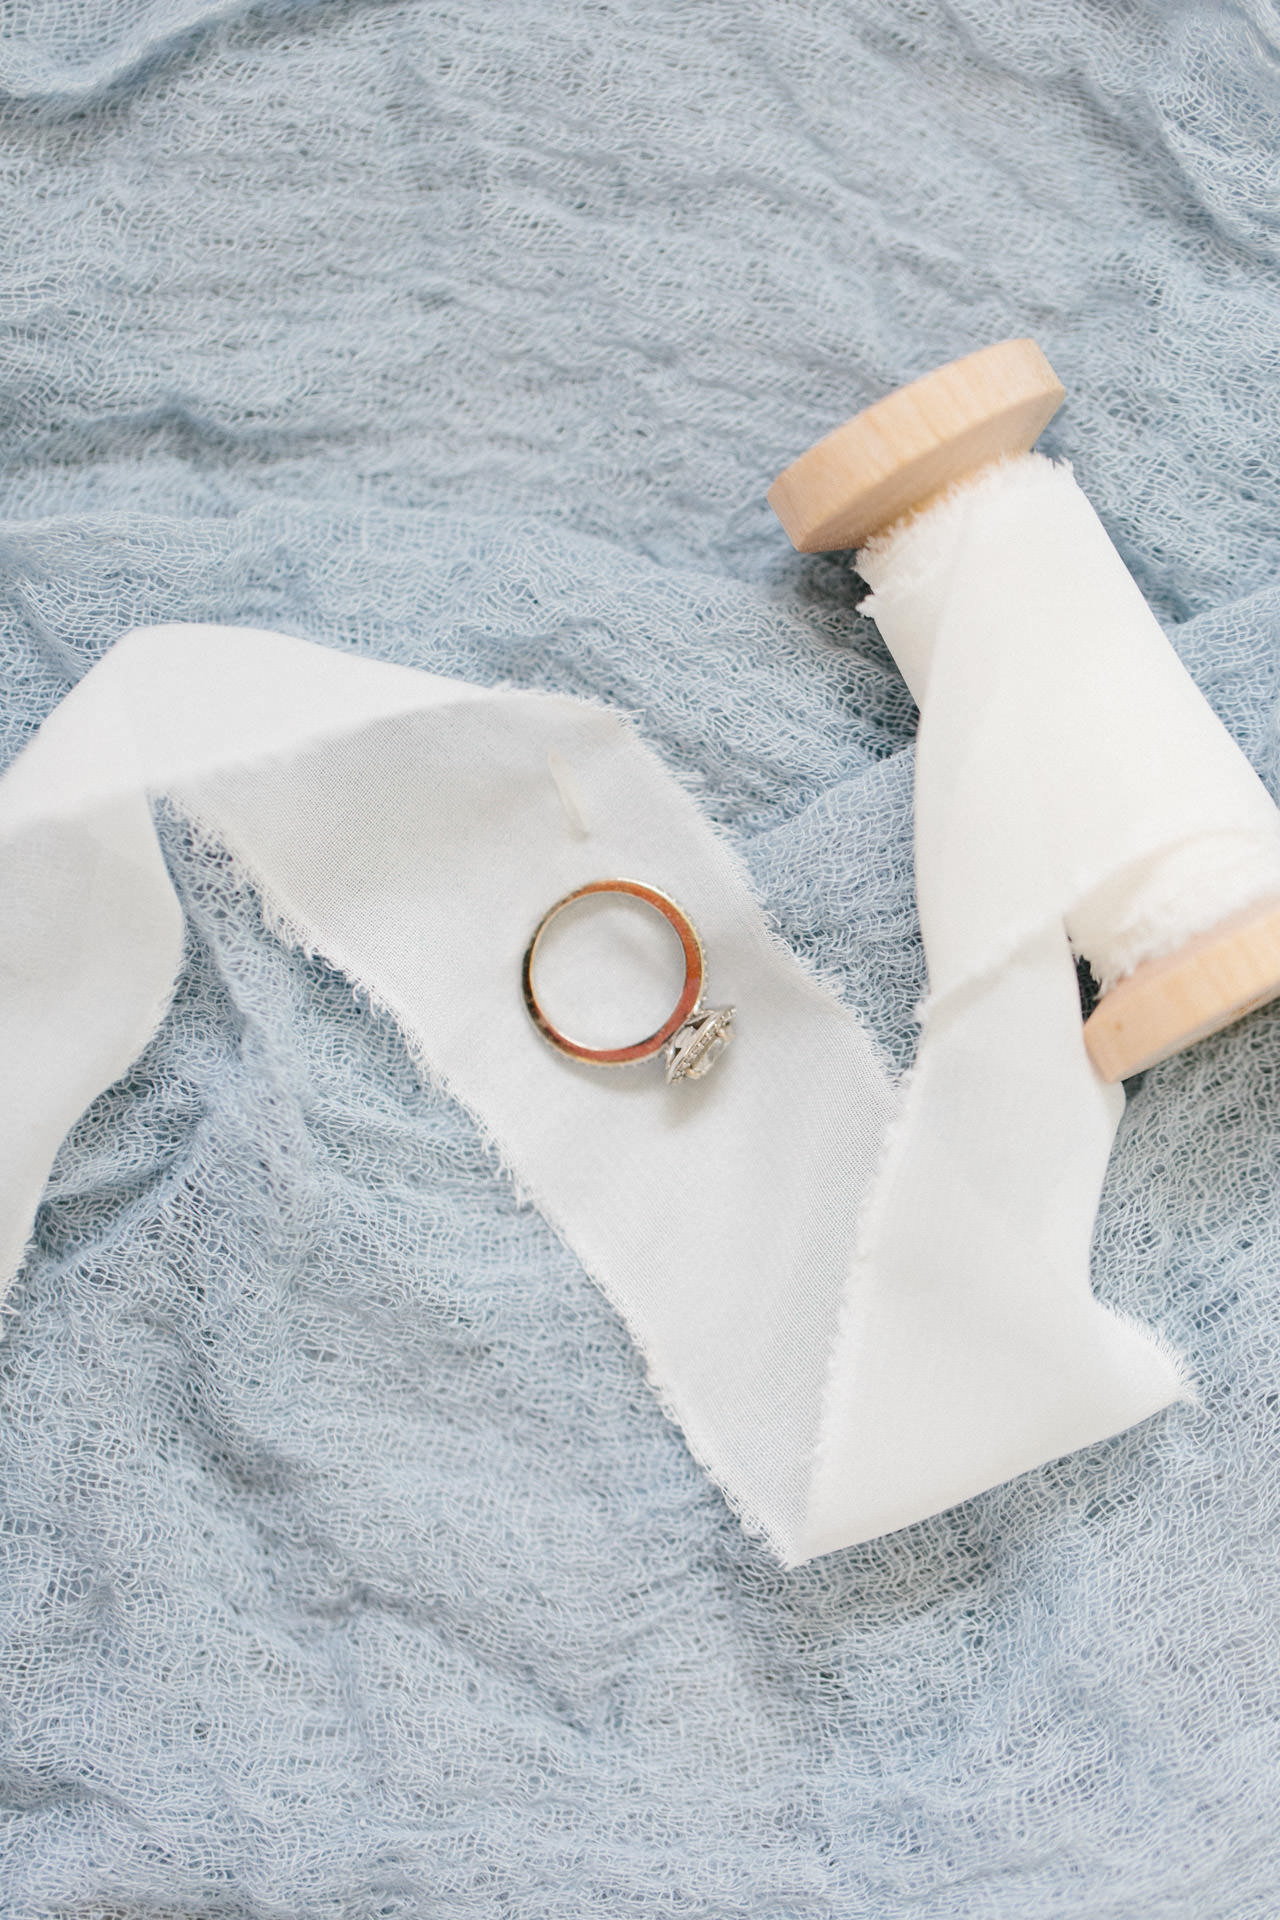 Wedding ring laying on linen